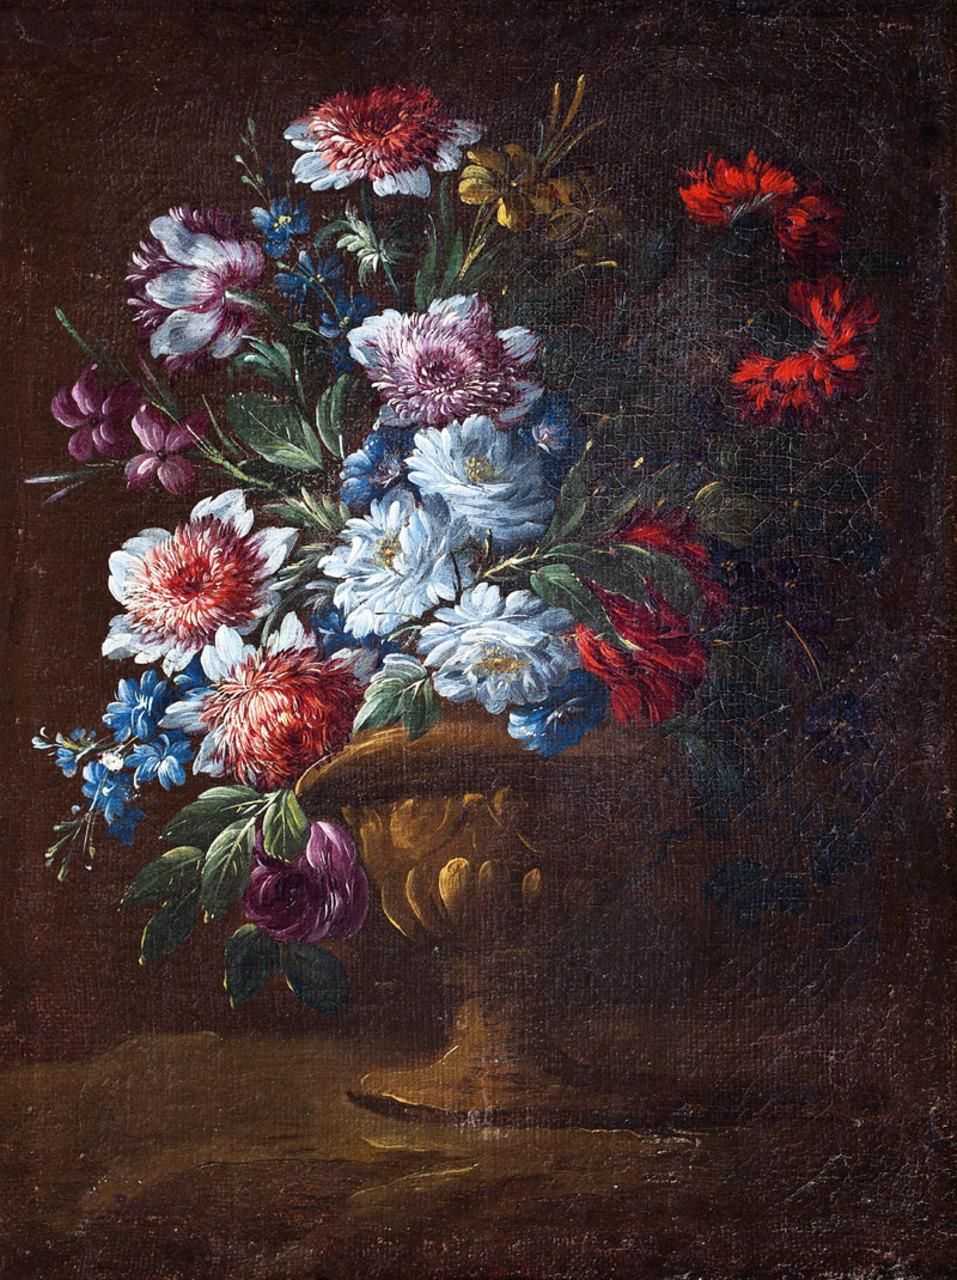 ESCUELA VALENCIANA, S. XVIII Vase with flowers
Oil on canvas
40 x 30 cm.